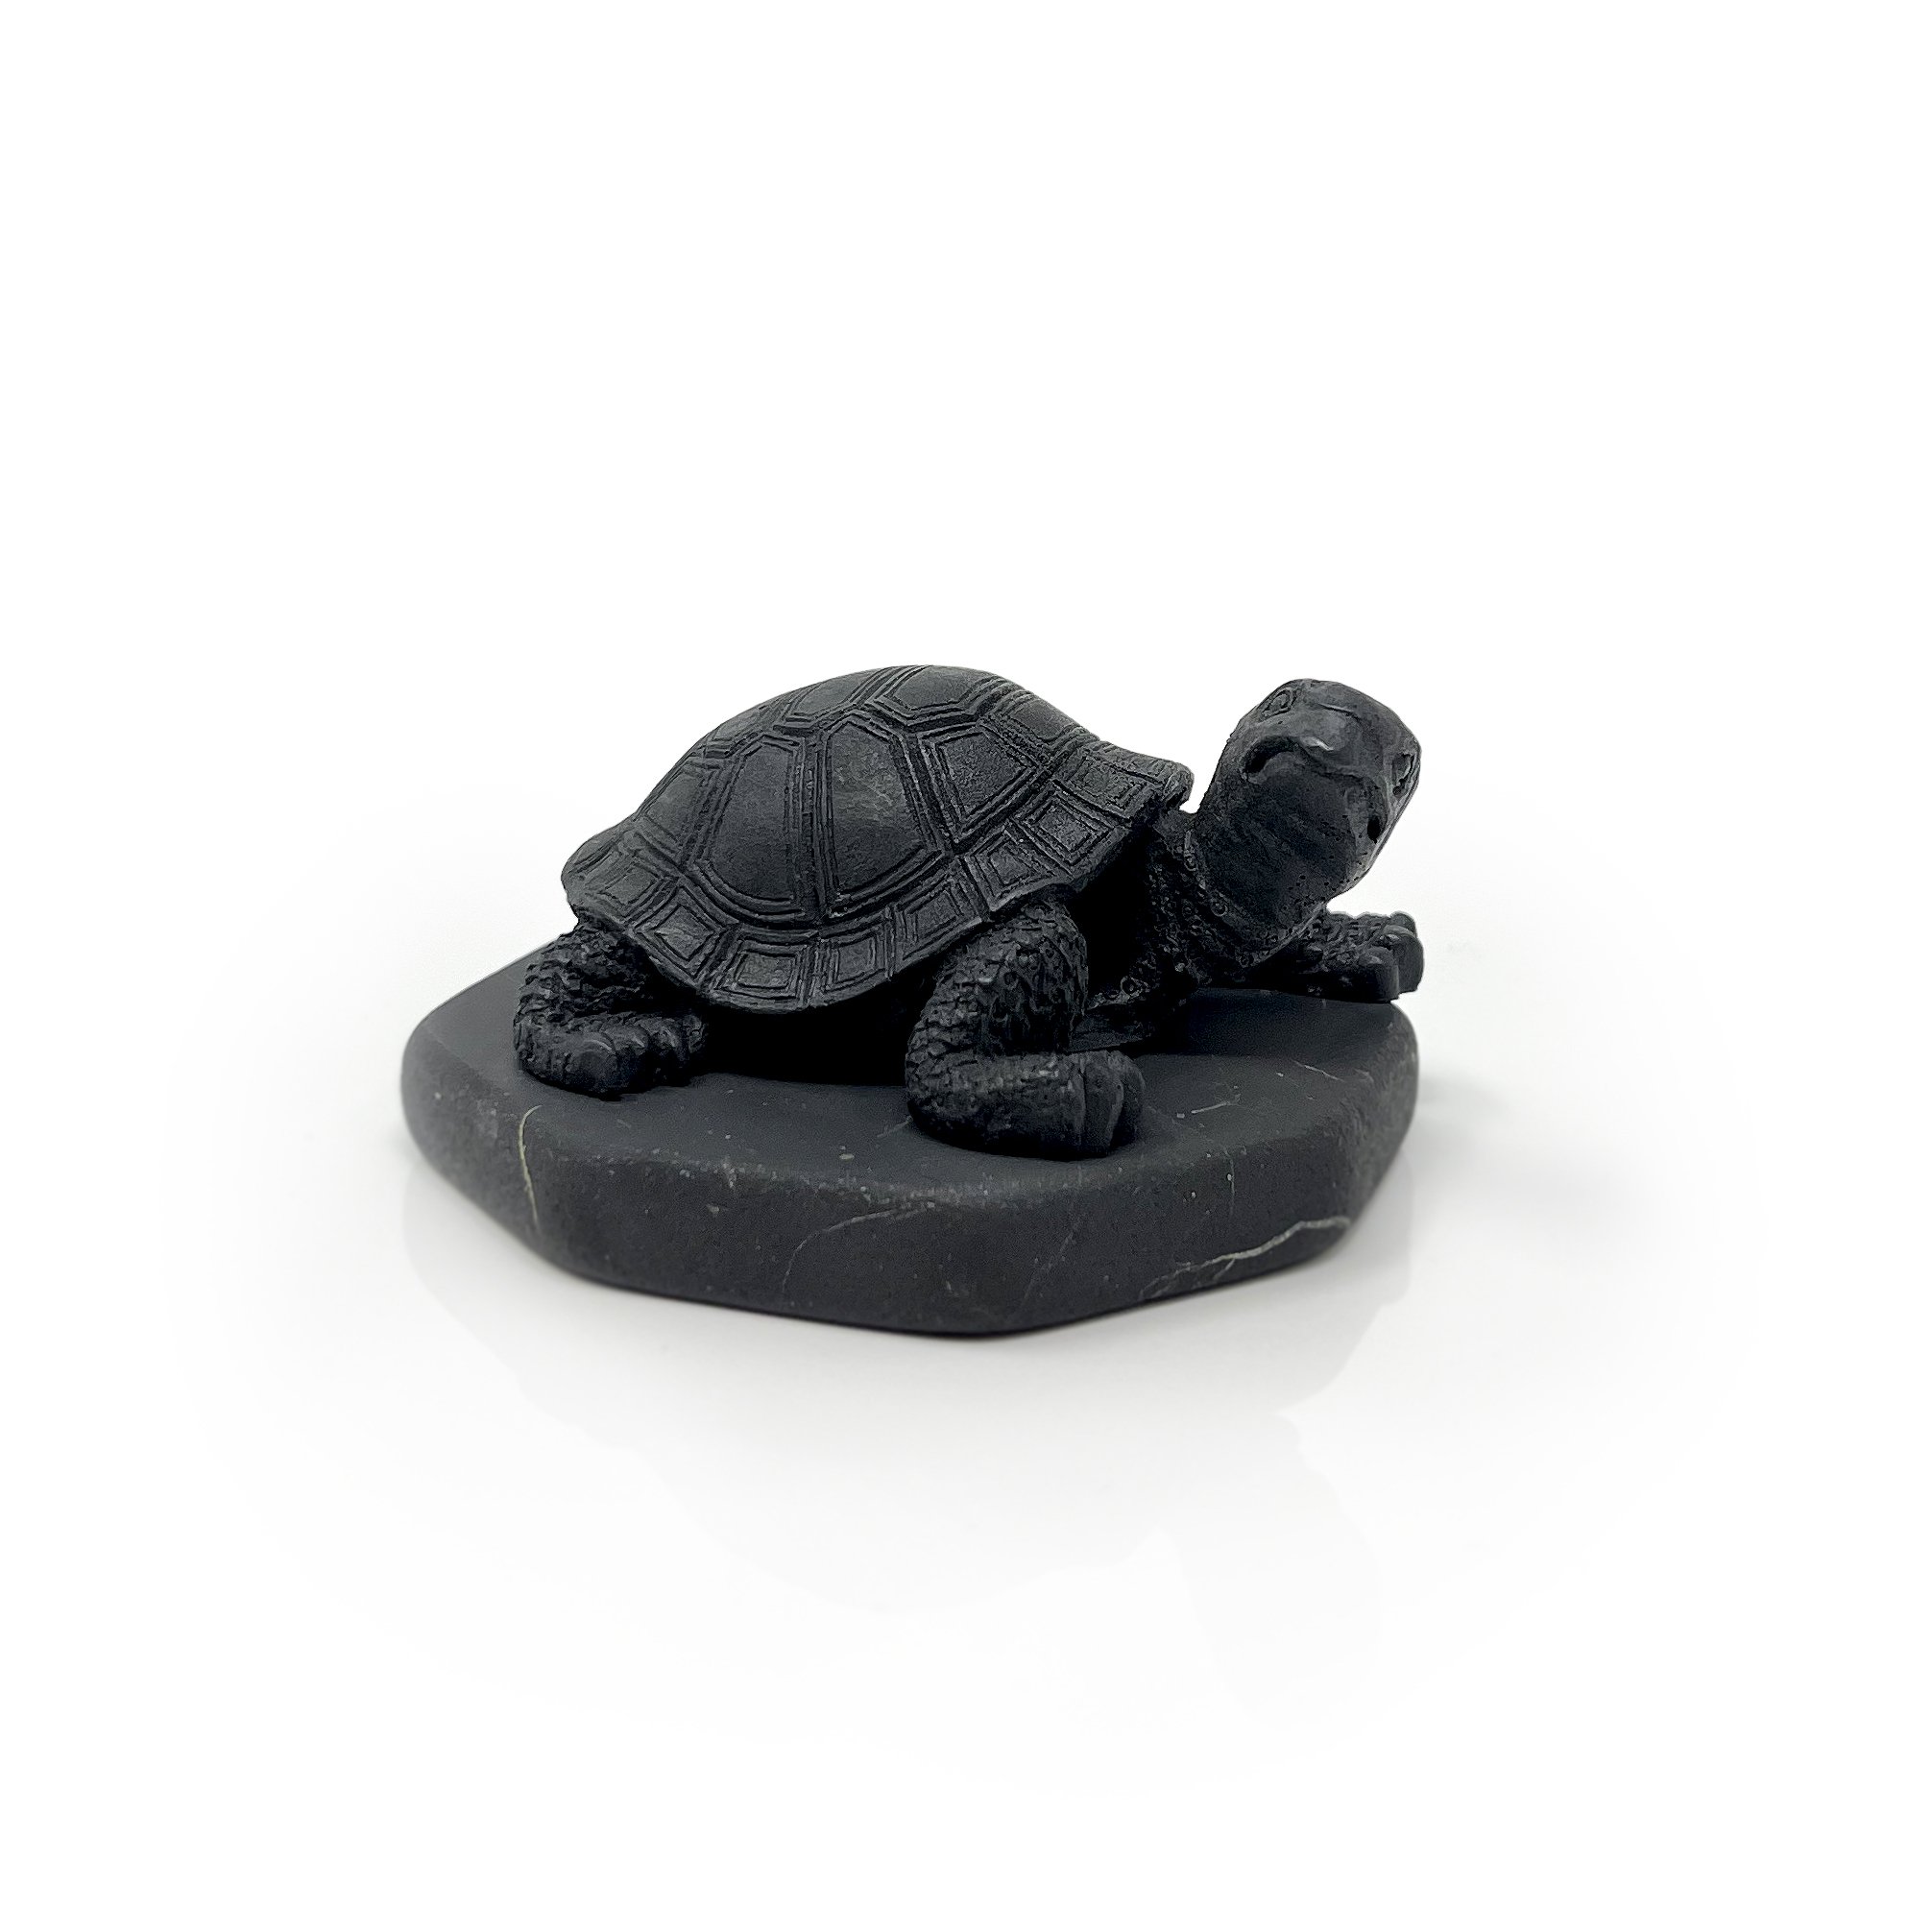 Shungite Turtle Figurine - Looking Right On Shungite Hexagonal Base